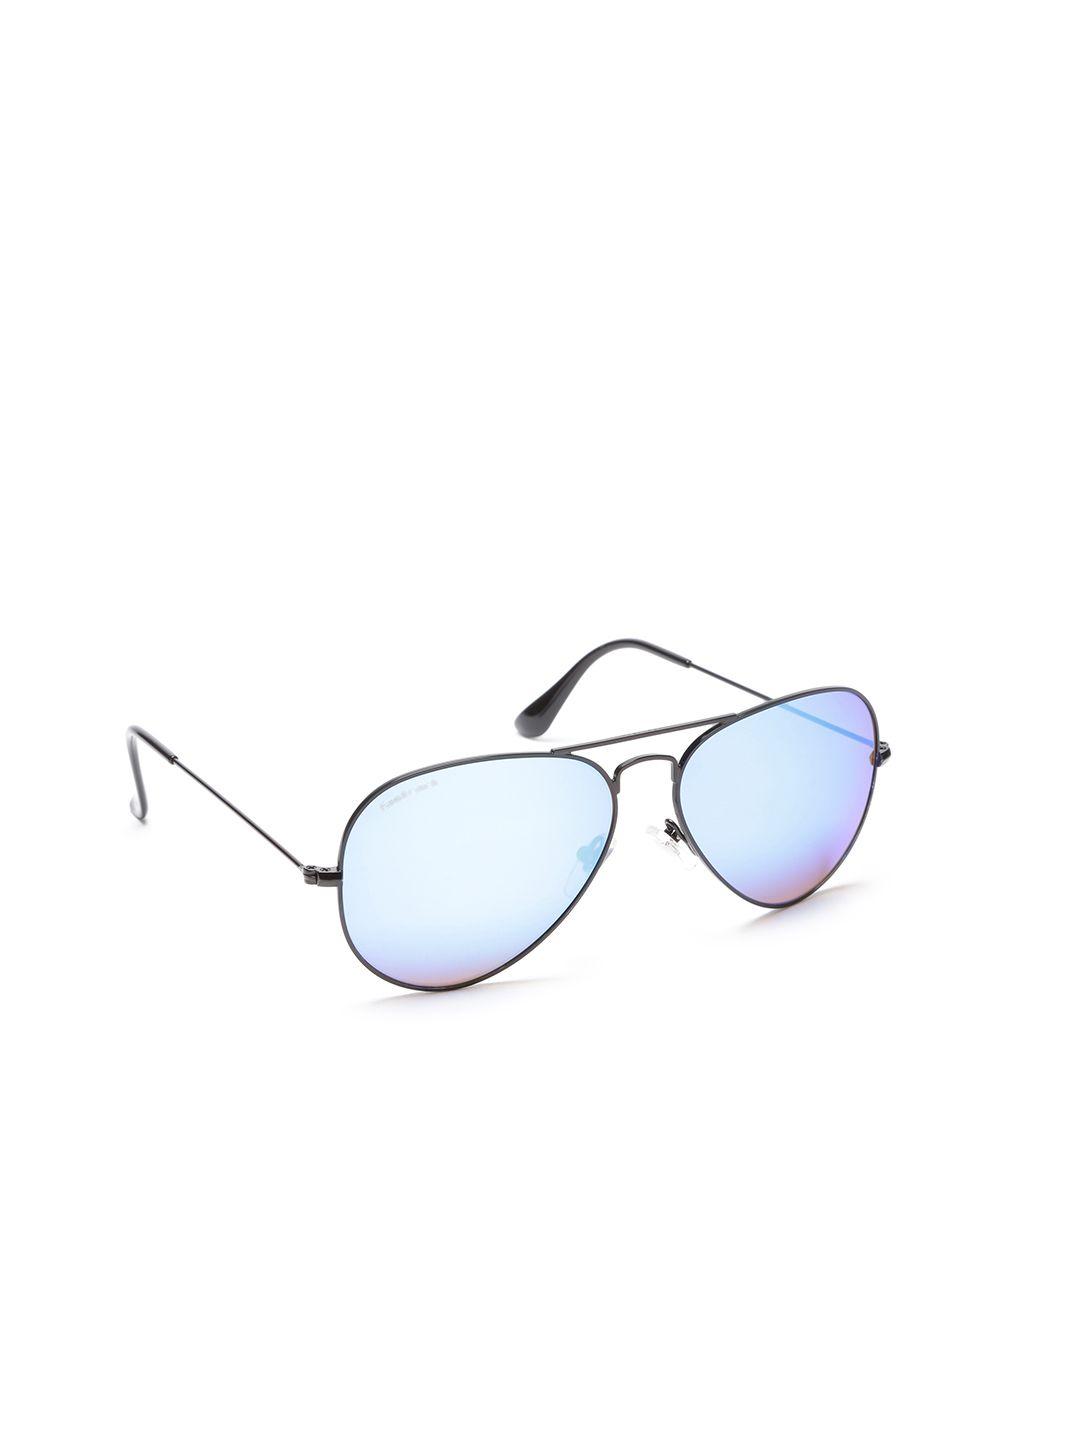 fastrack-men-aviator-sunglasses-m165bu24g